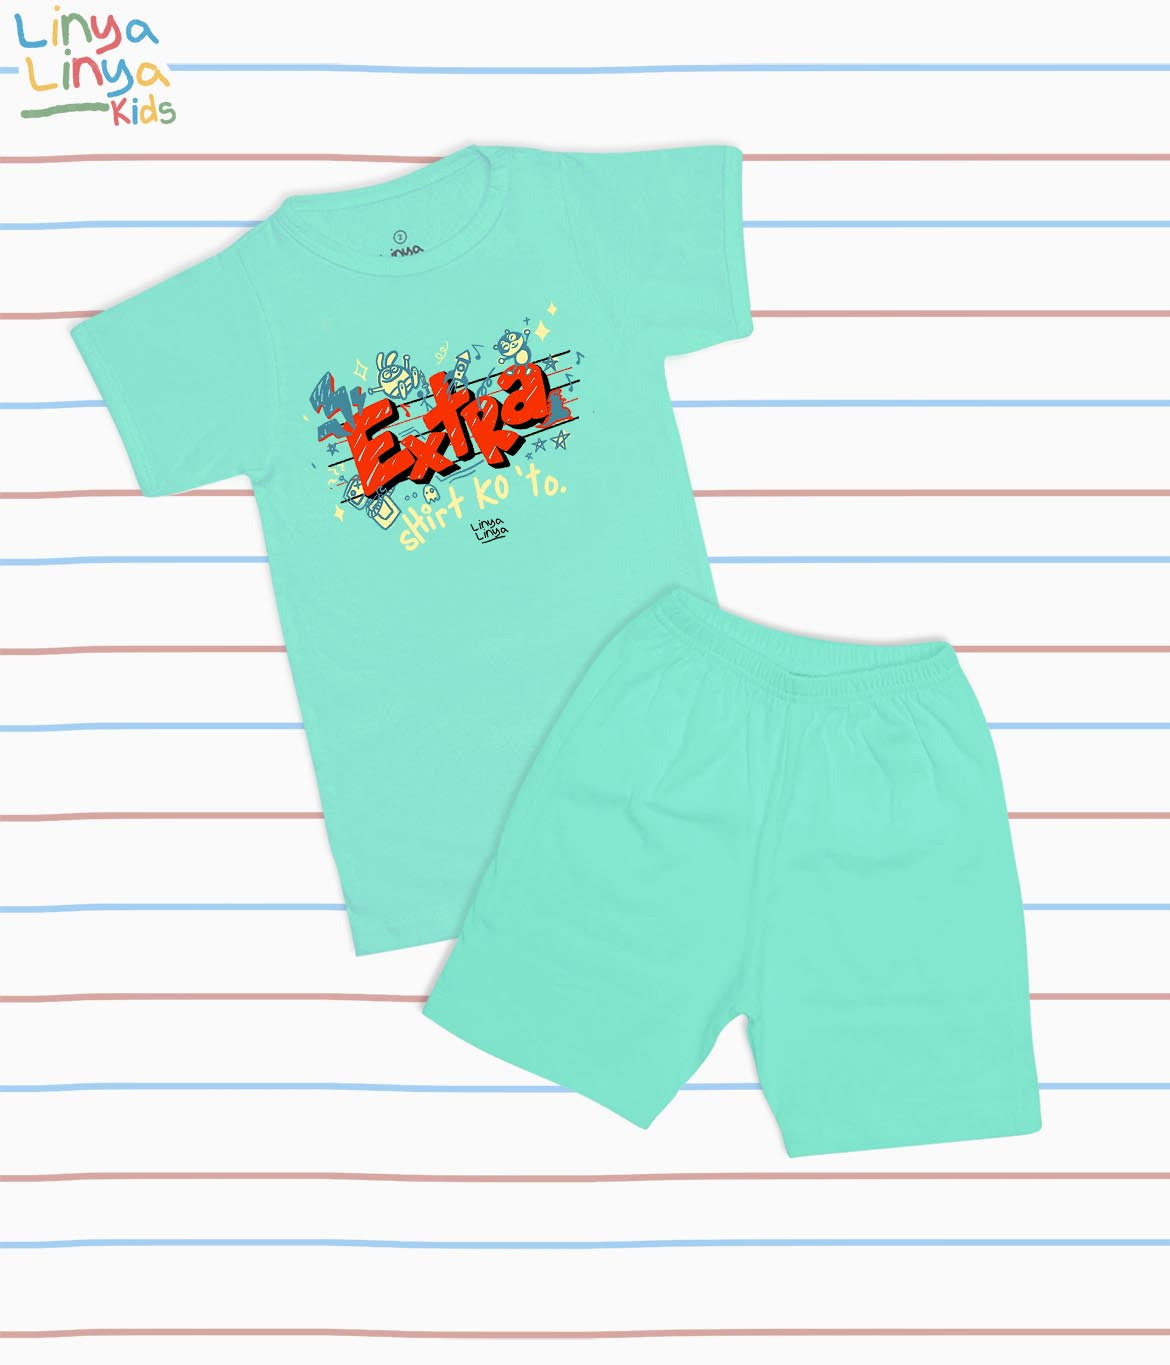 Kids Complete Terno Set: Extra Shirt Ko 'to.